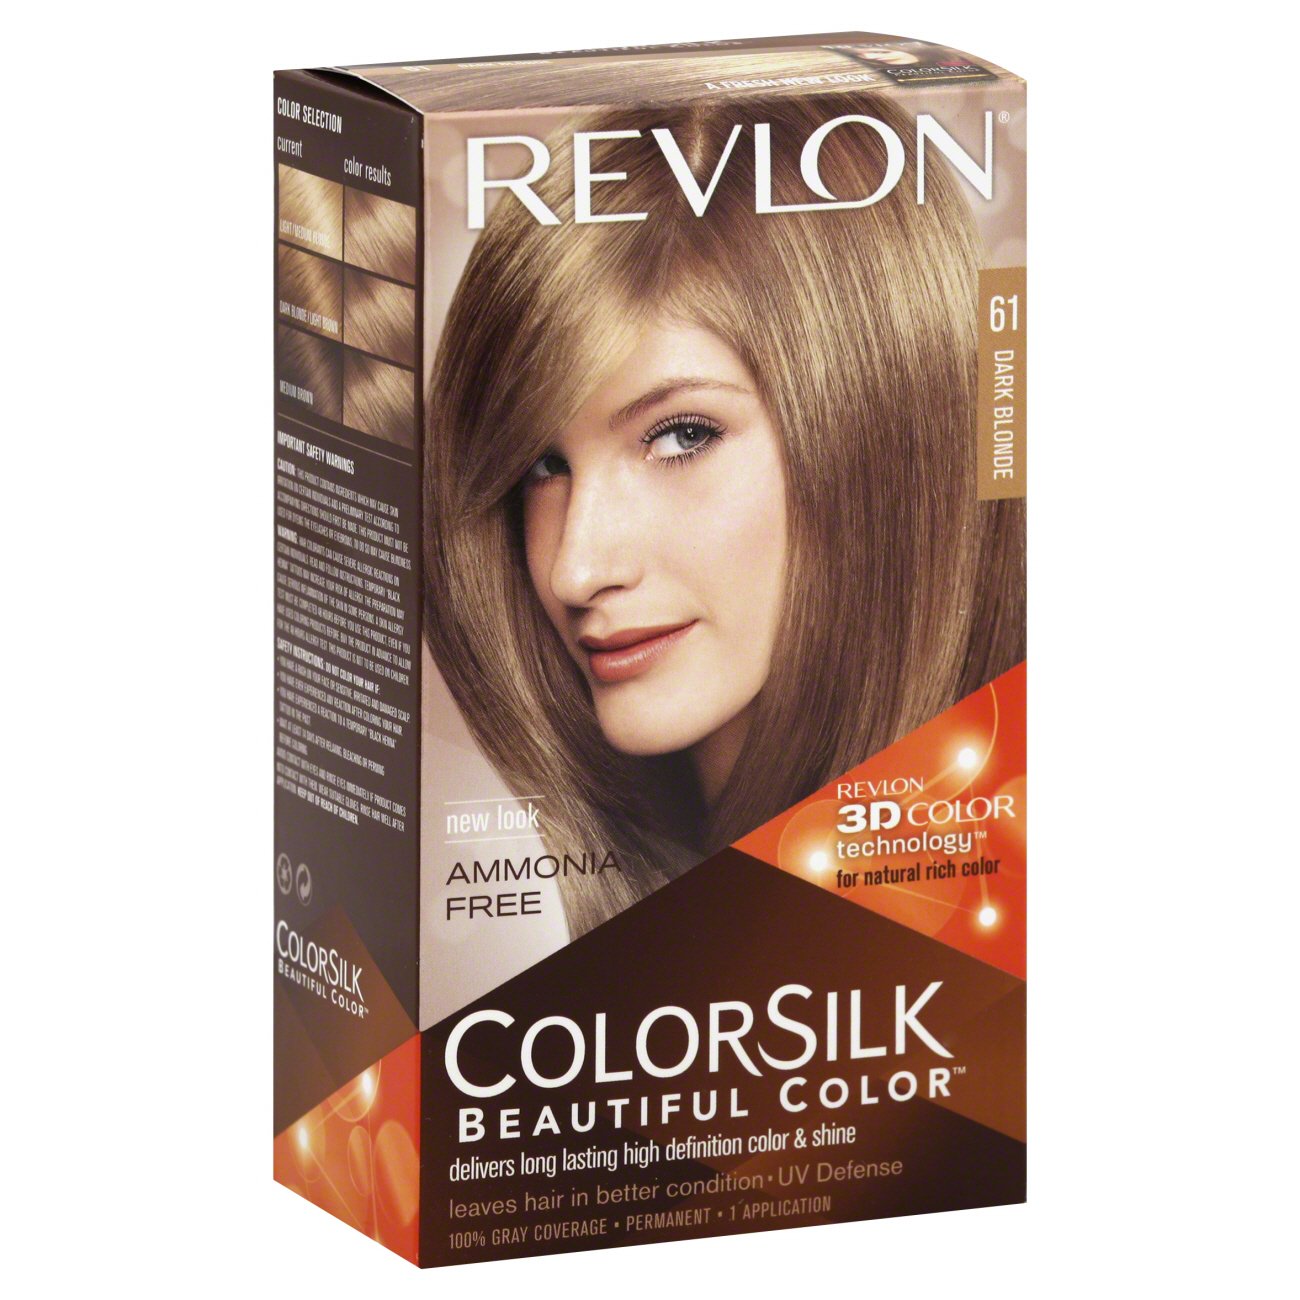 Revlon Colorsilk Beautiful Color 61 Dark Blonde Shop Hair Color At H E B